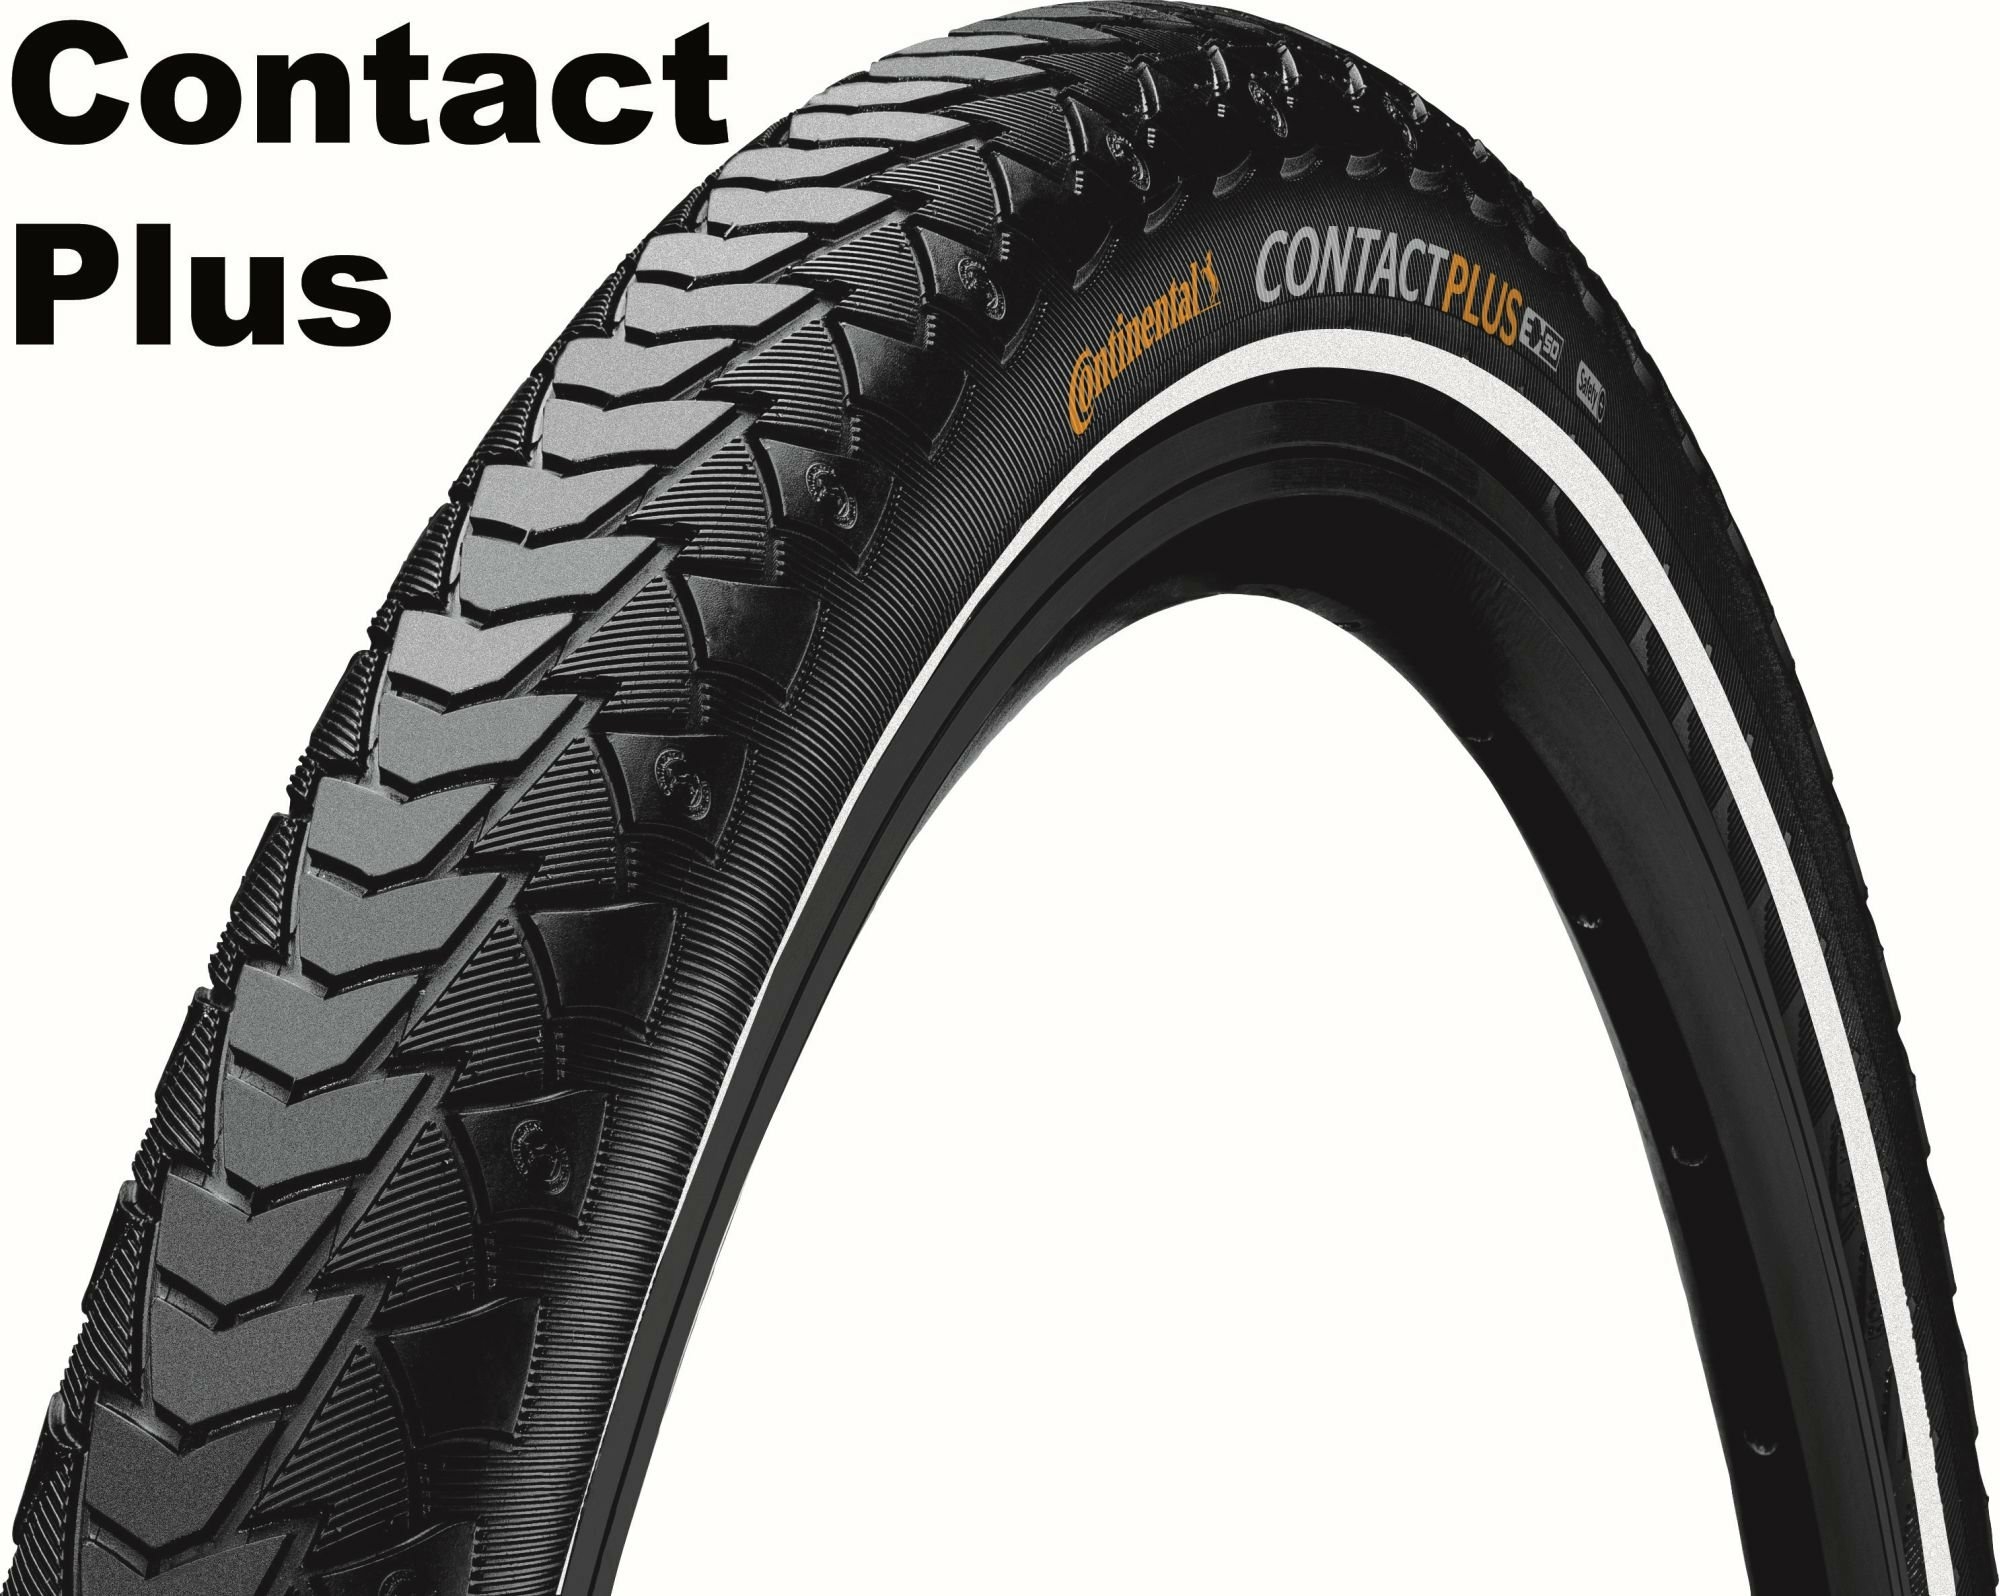 Fahrradteile/Bereifung: Continental  SafetyPlus Breaker - 28 Zoll Contact Plus (42-622) 